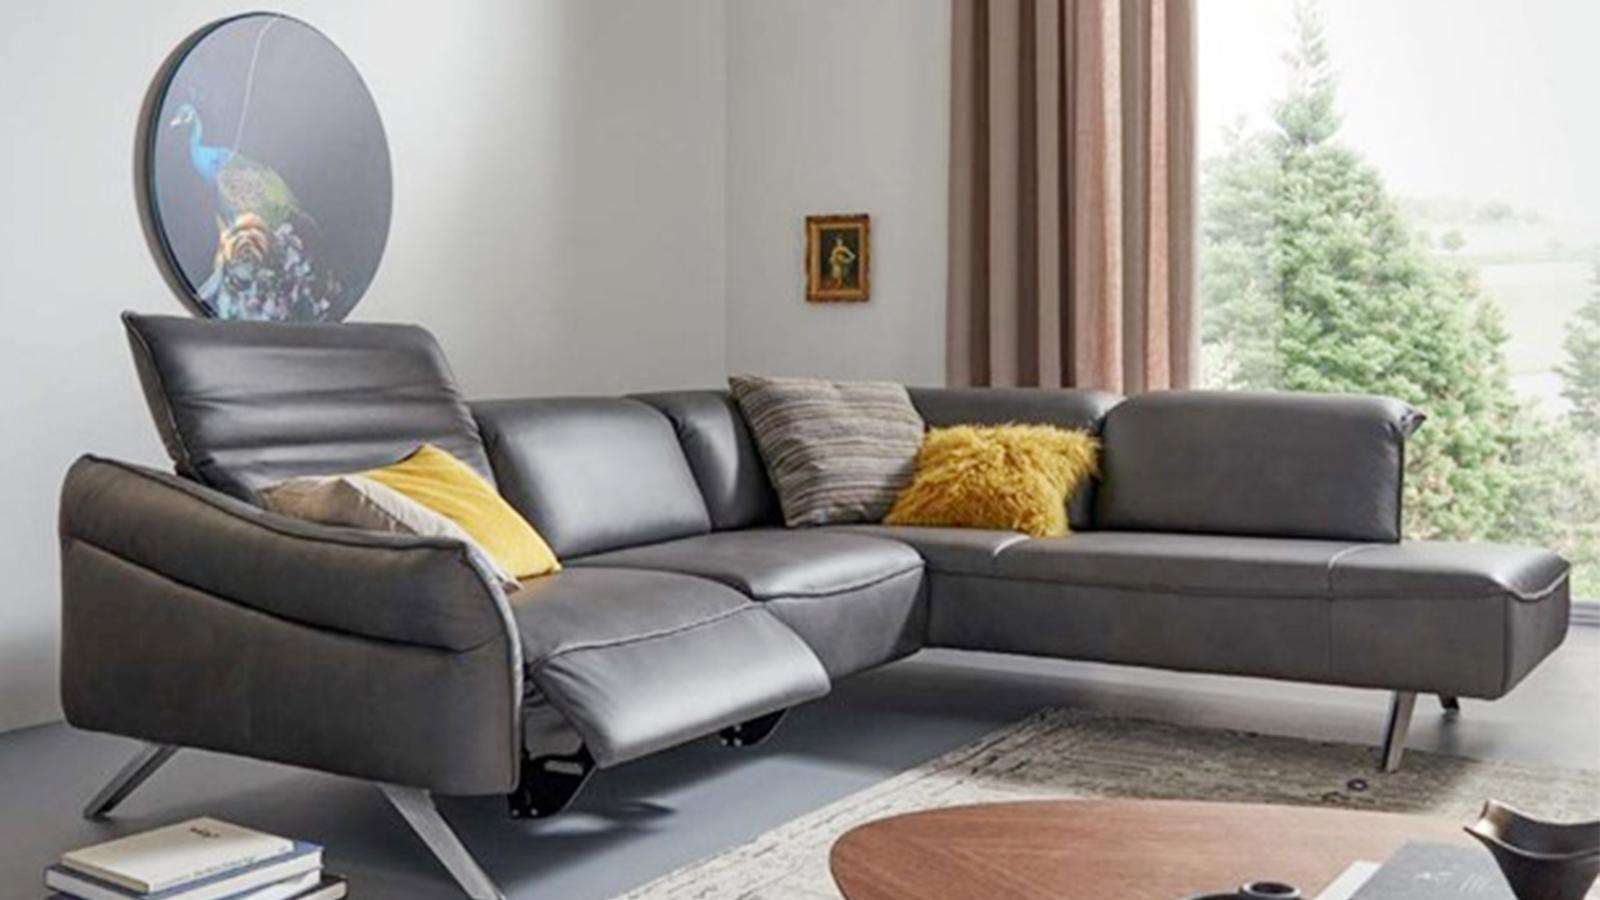 Contur-Bormio-Couch-details_GRW